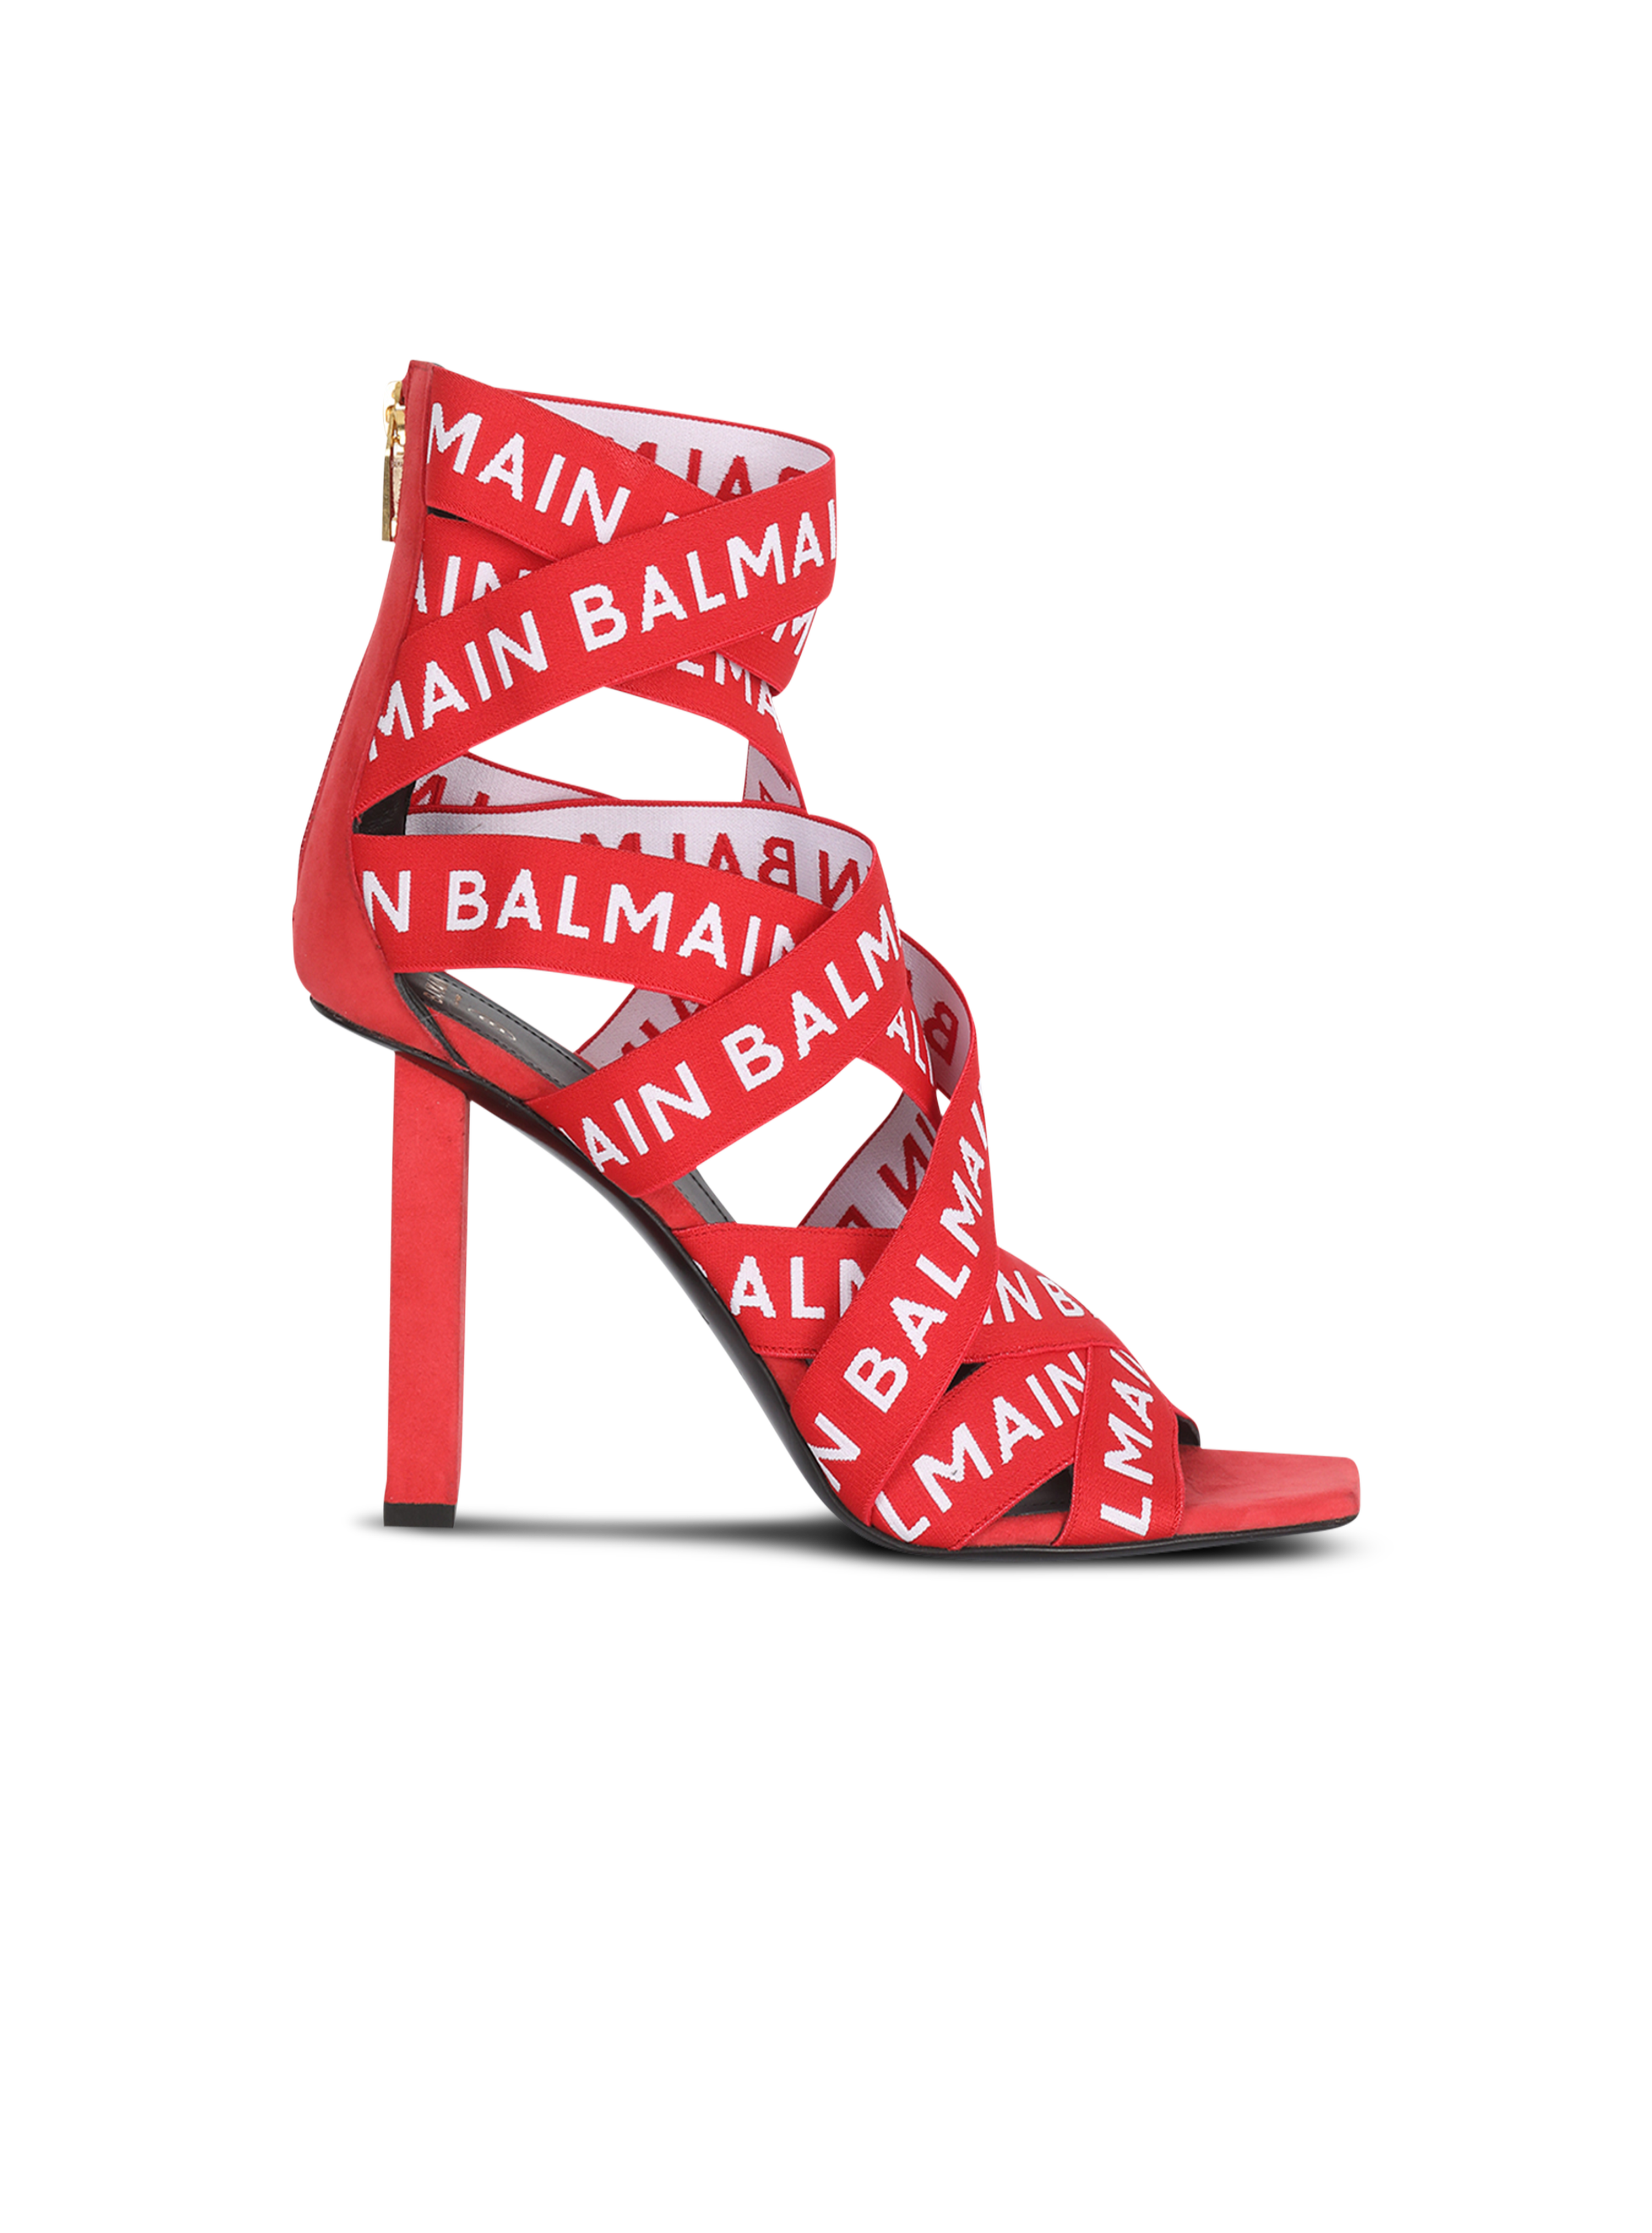 HIGH SUMMER CAPSULE - Union sandals with Balmain logo print, red